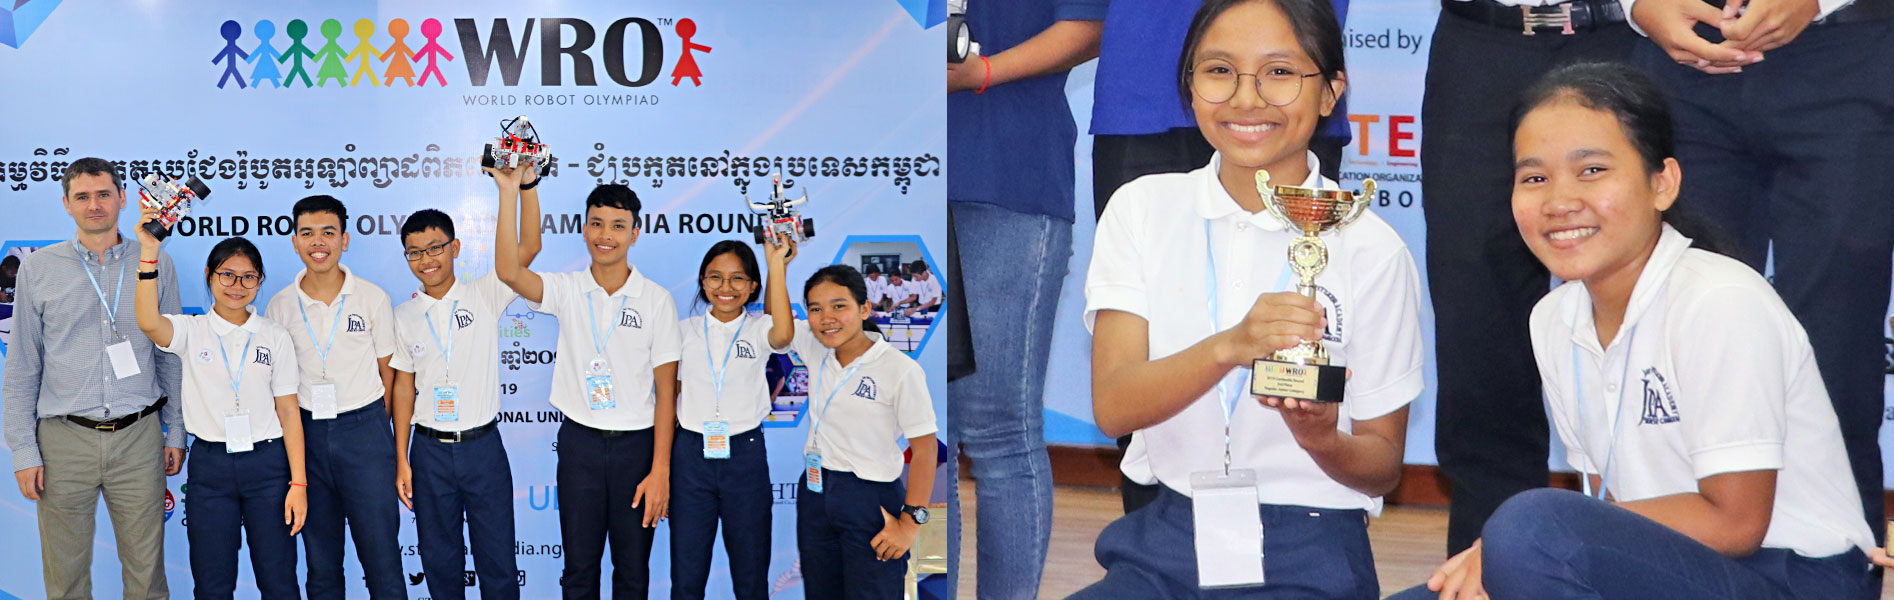 JPA World Robotics Olympiad WRO participants and JPA team members. Jay Pritzker Academy, Siem Reap, Cambodia. Jay-Pritzker-Academy-Siem-Reap-Cambodia.